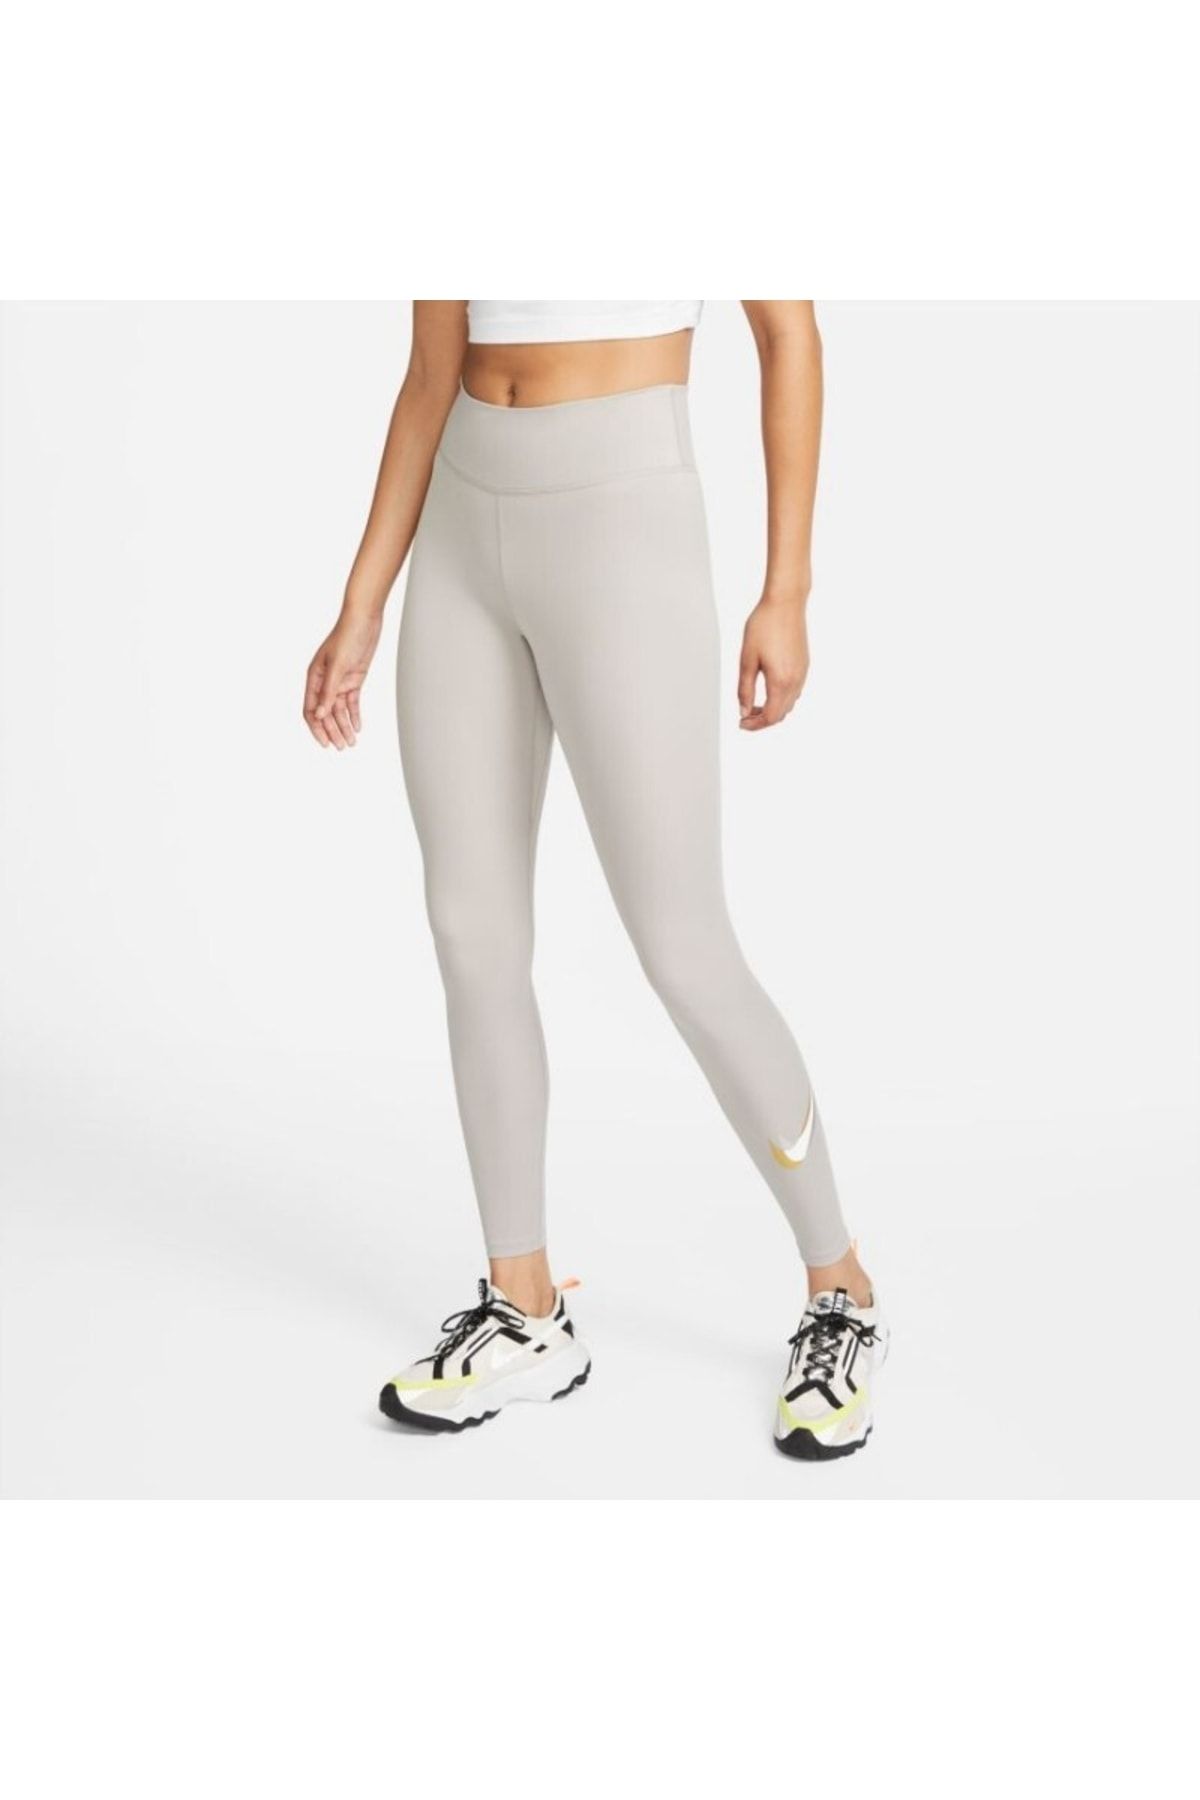 Nike Dri-fit One Luxe Athletic Kadın Tayt Do2588-033